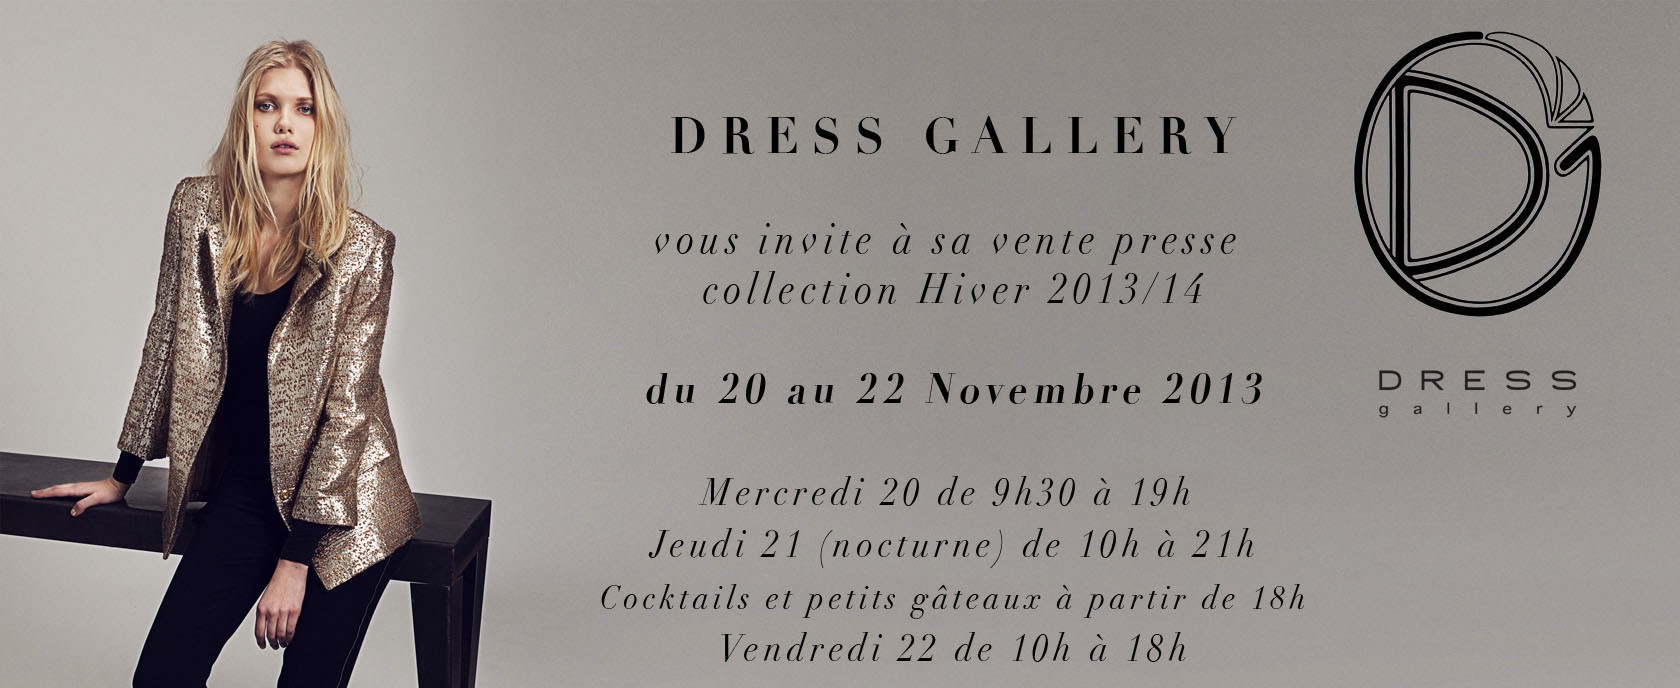 dress-gallery